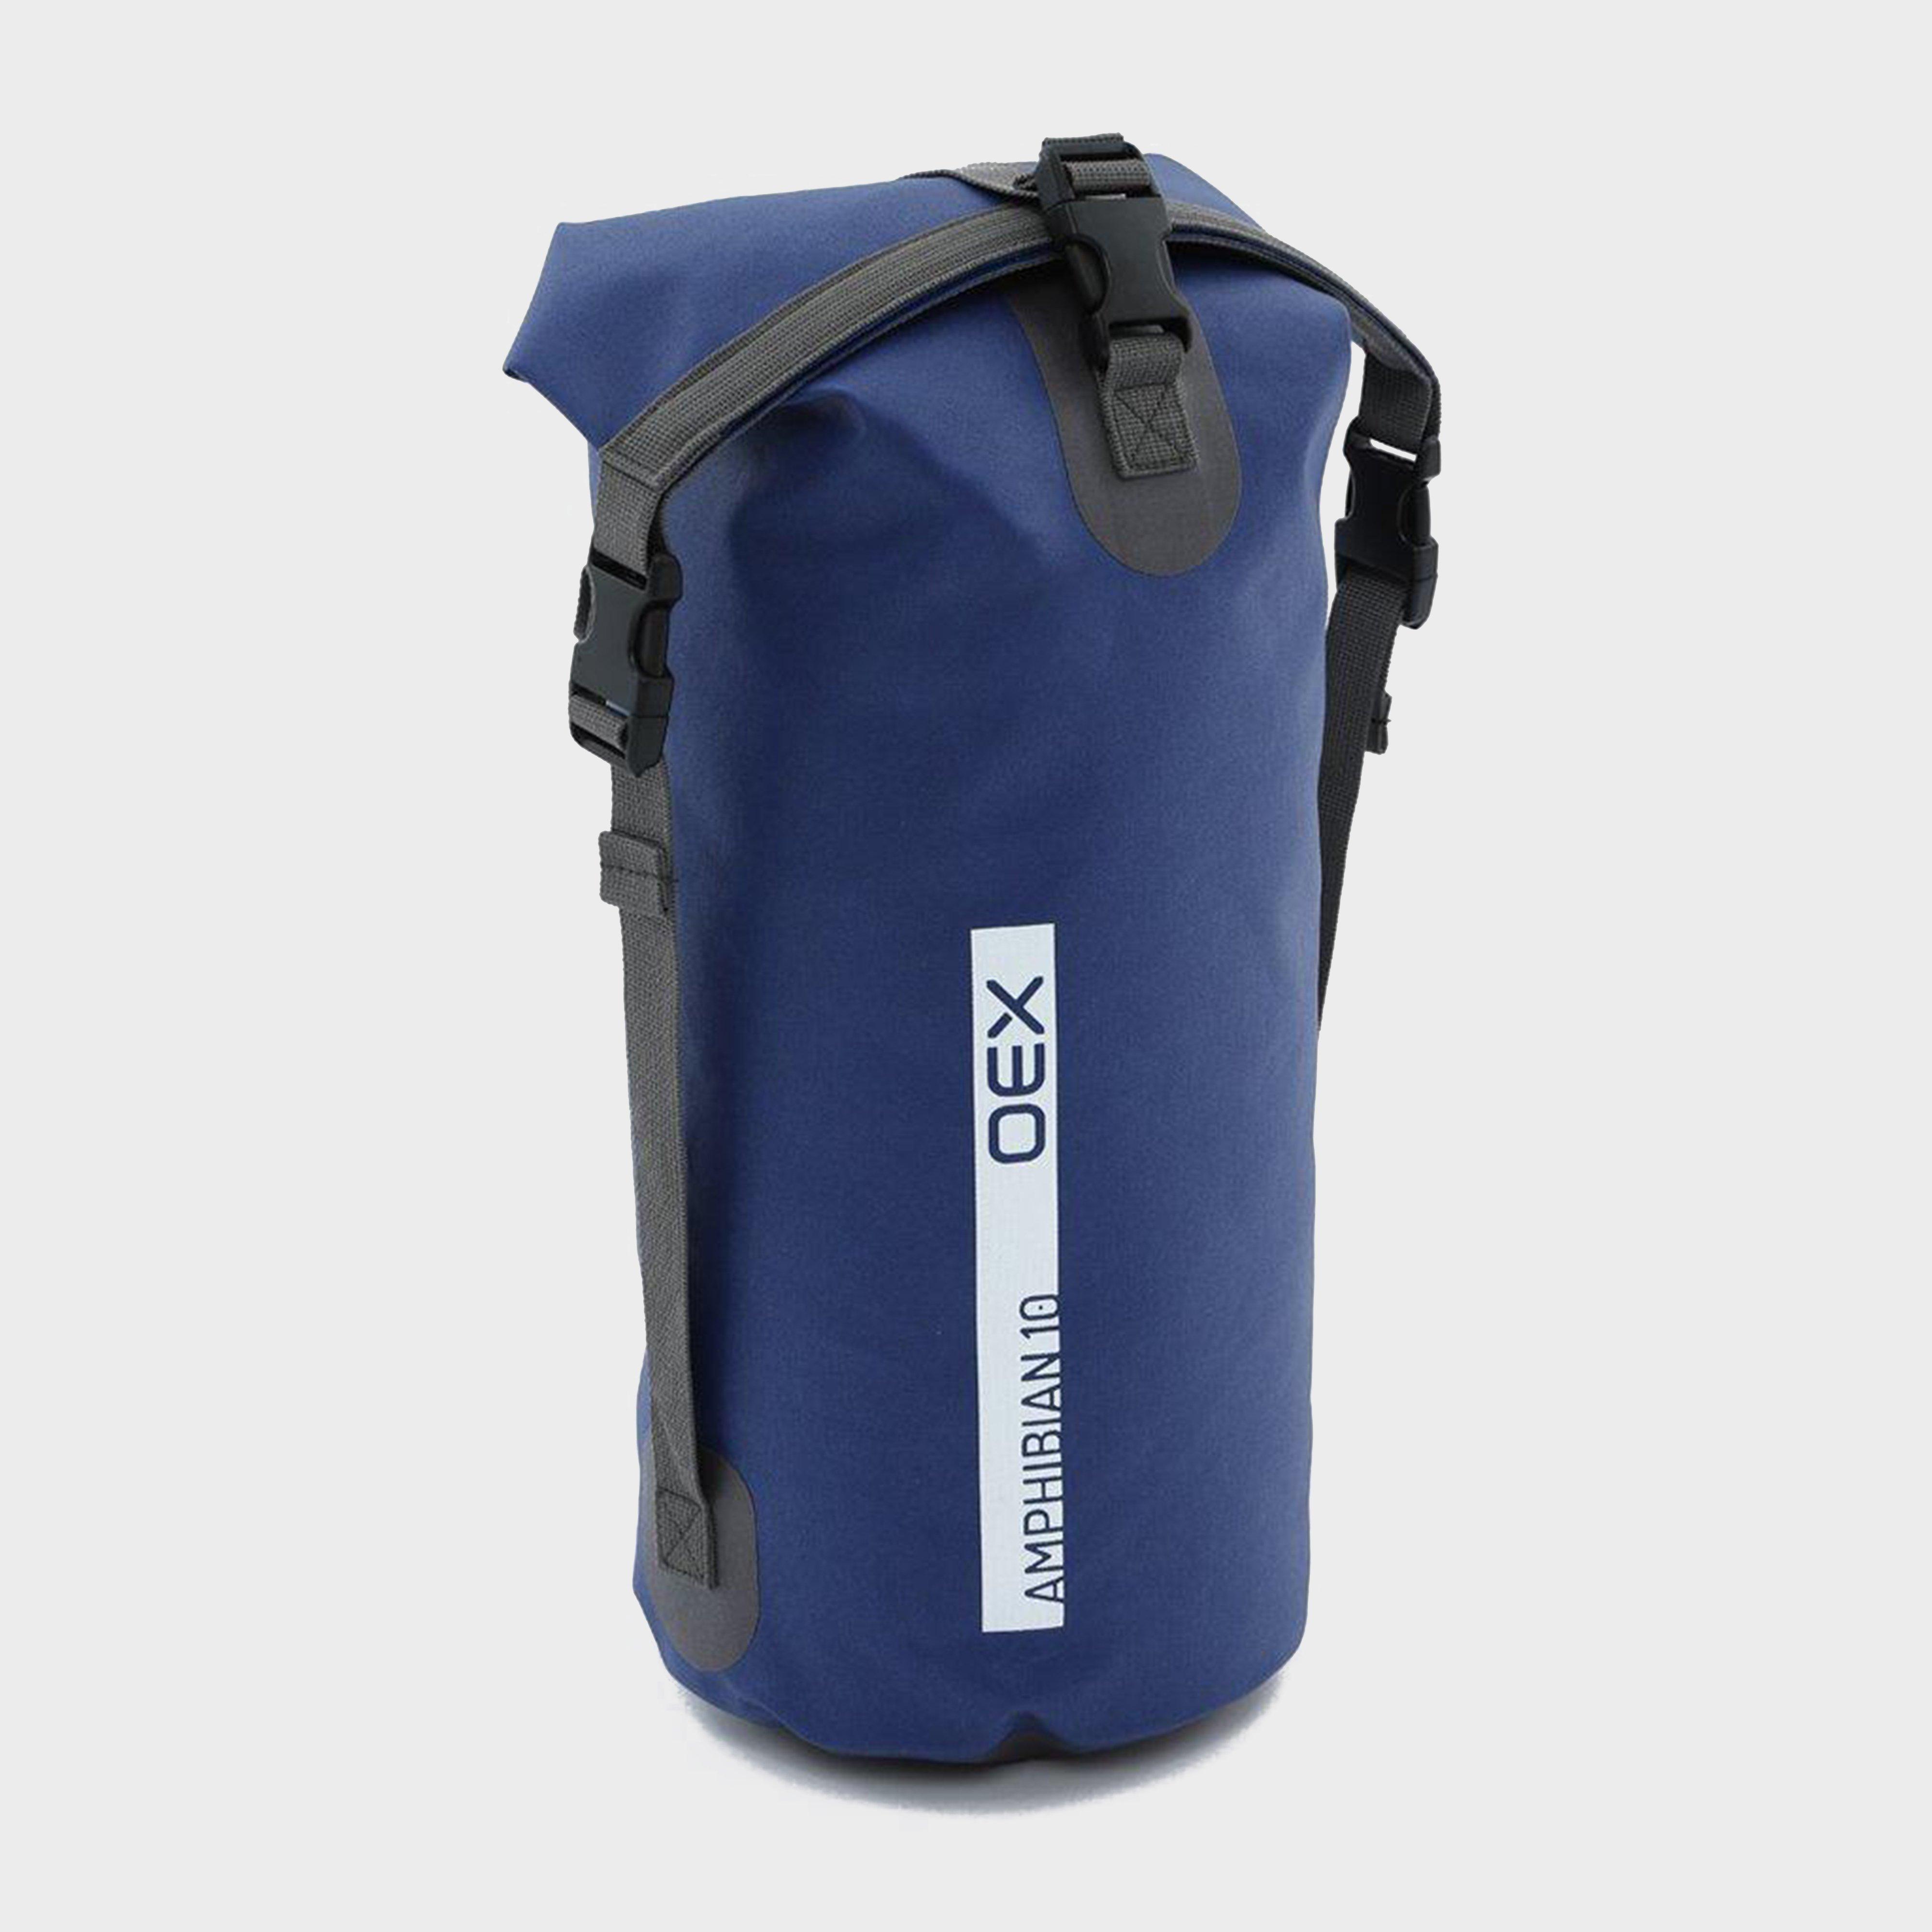 New Oex Amphibian Waterproof Bag 30L 